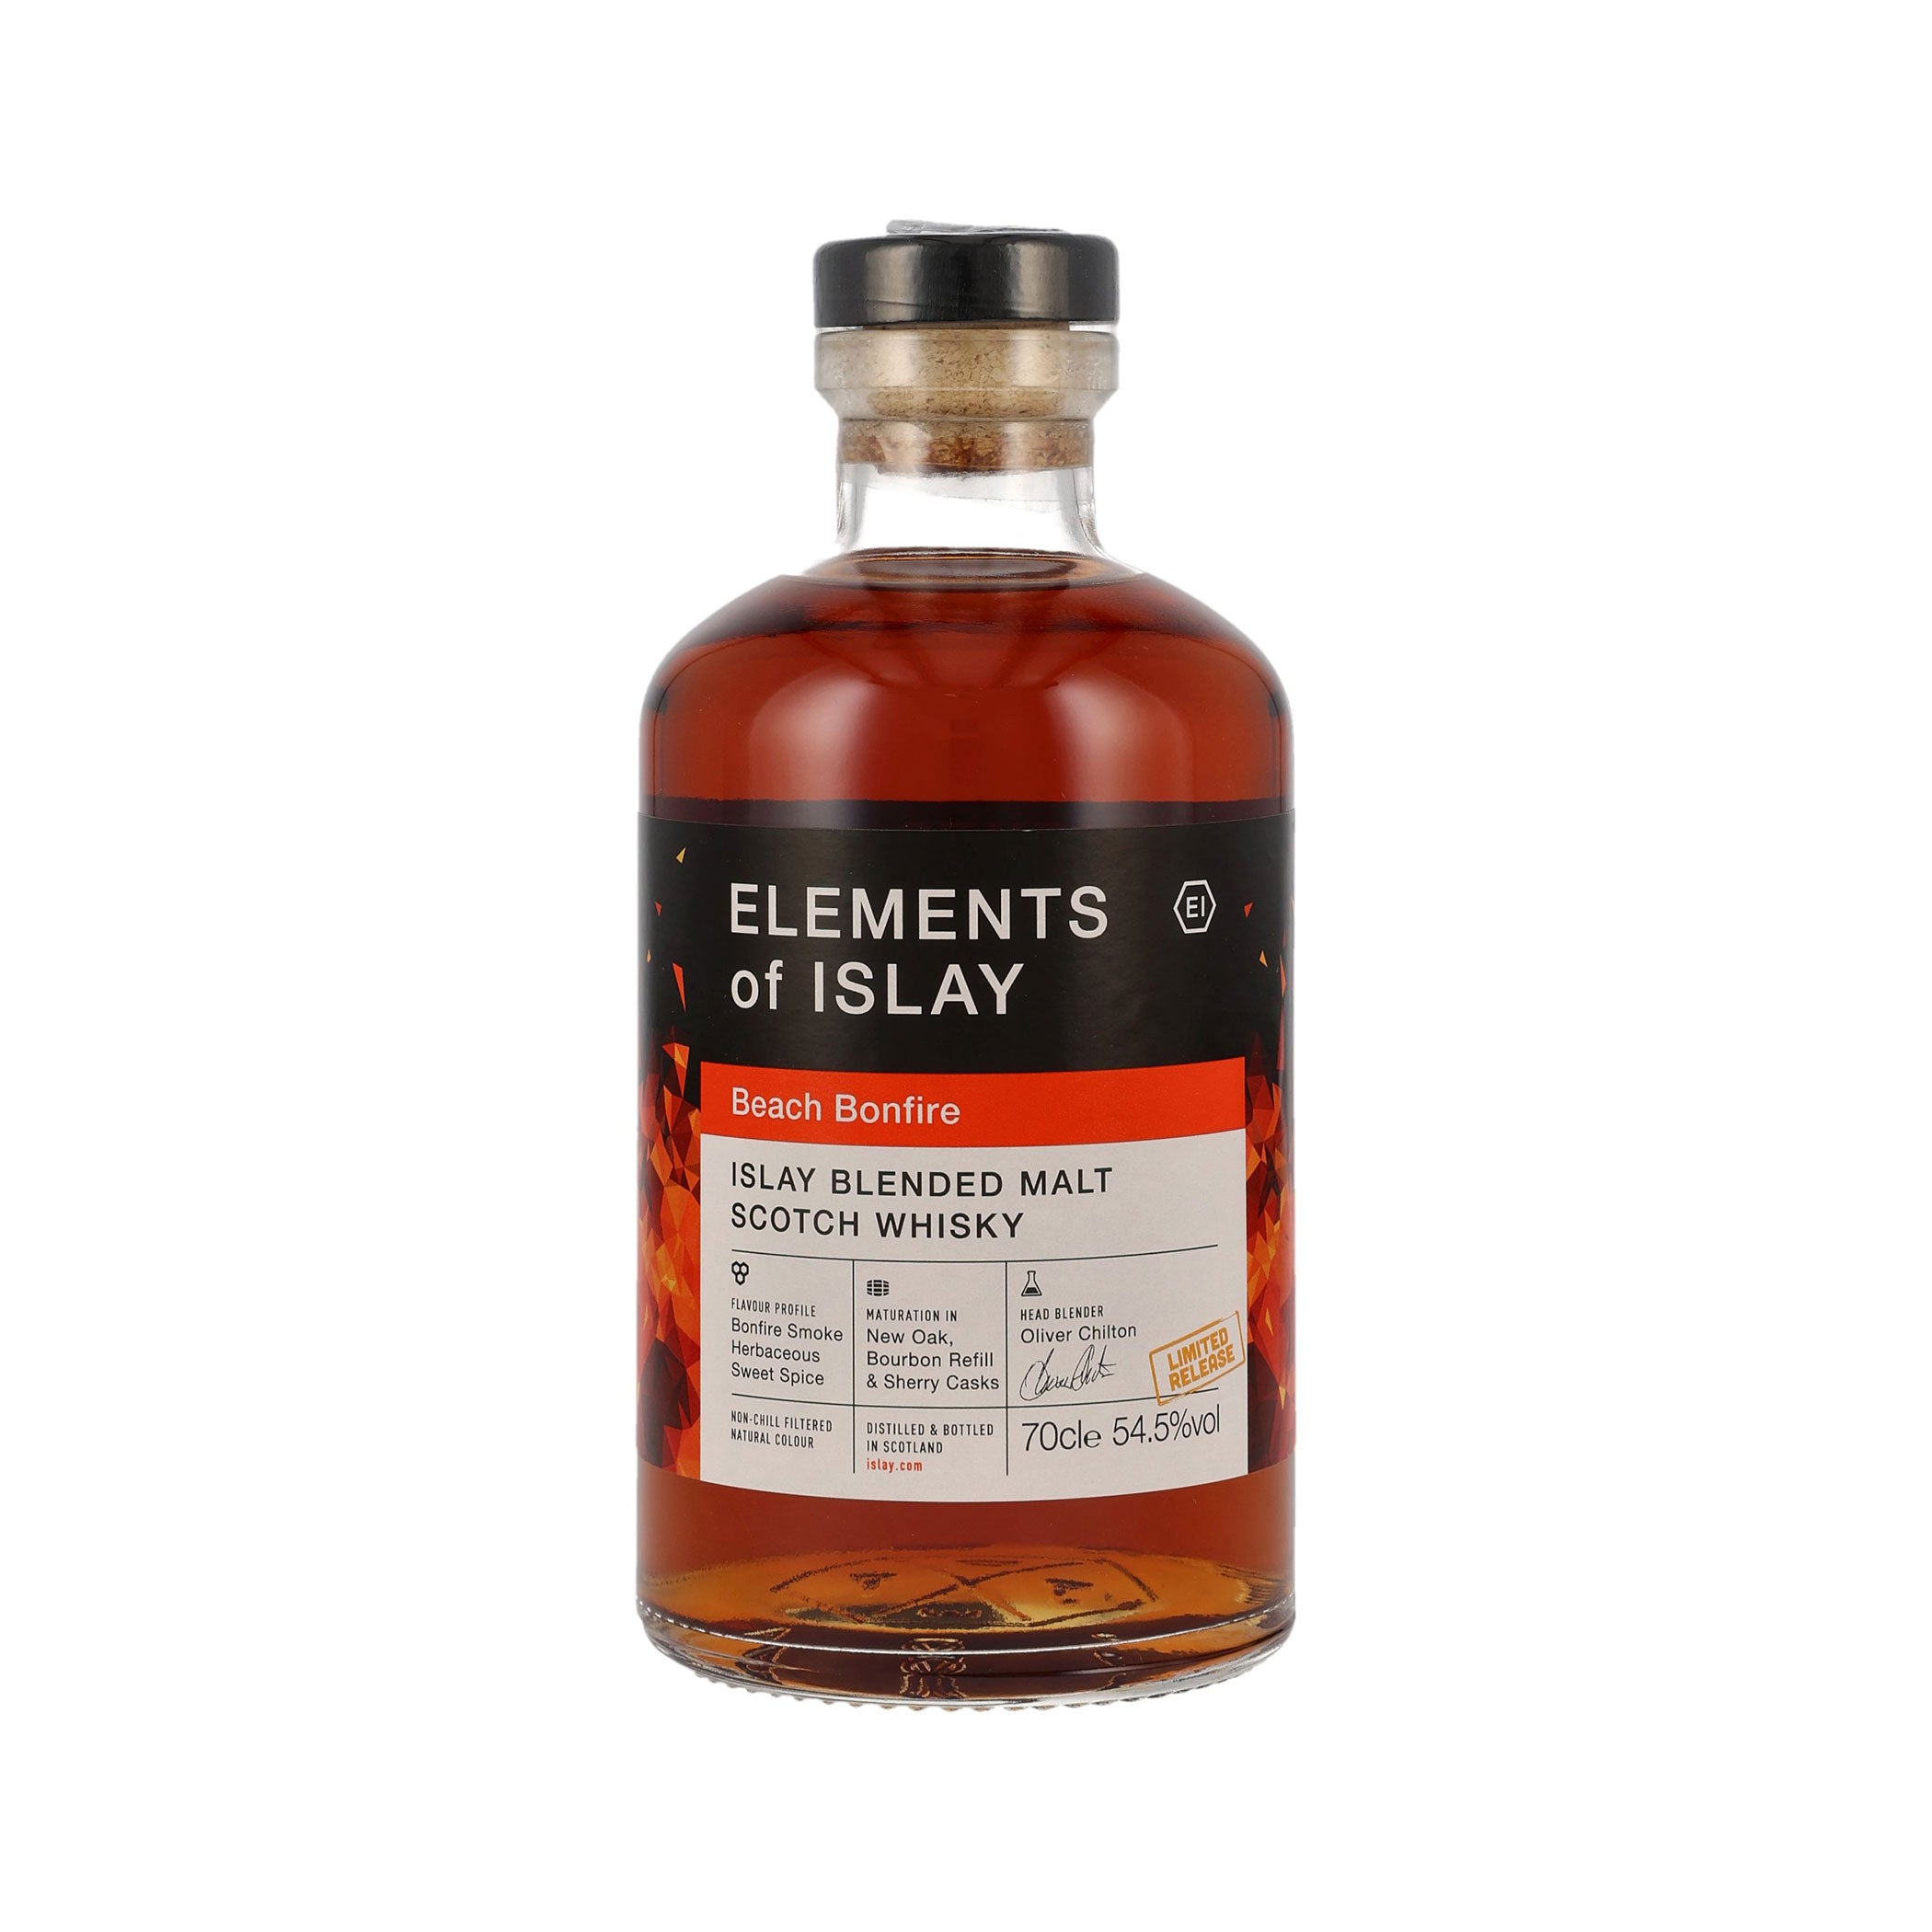 Elements of Islay - Beach Bonfire - Islay Blended Scotch Whisky